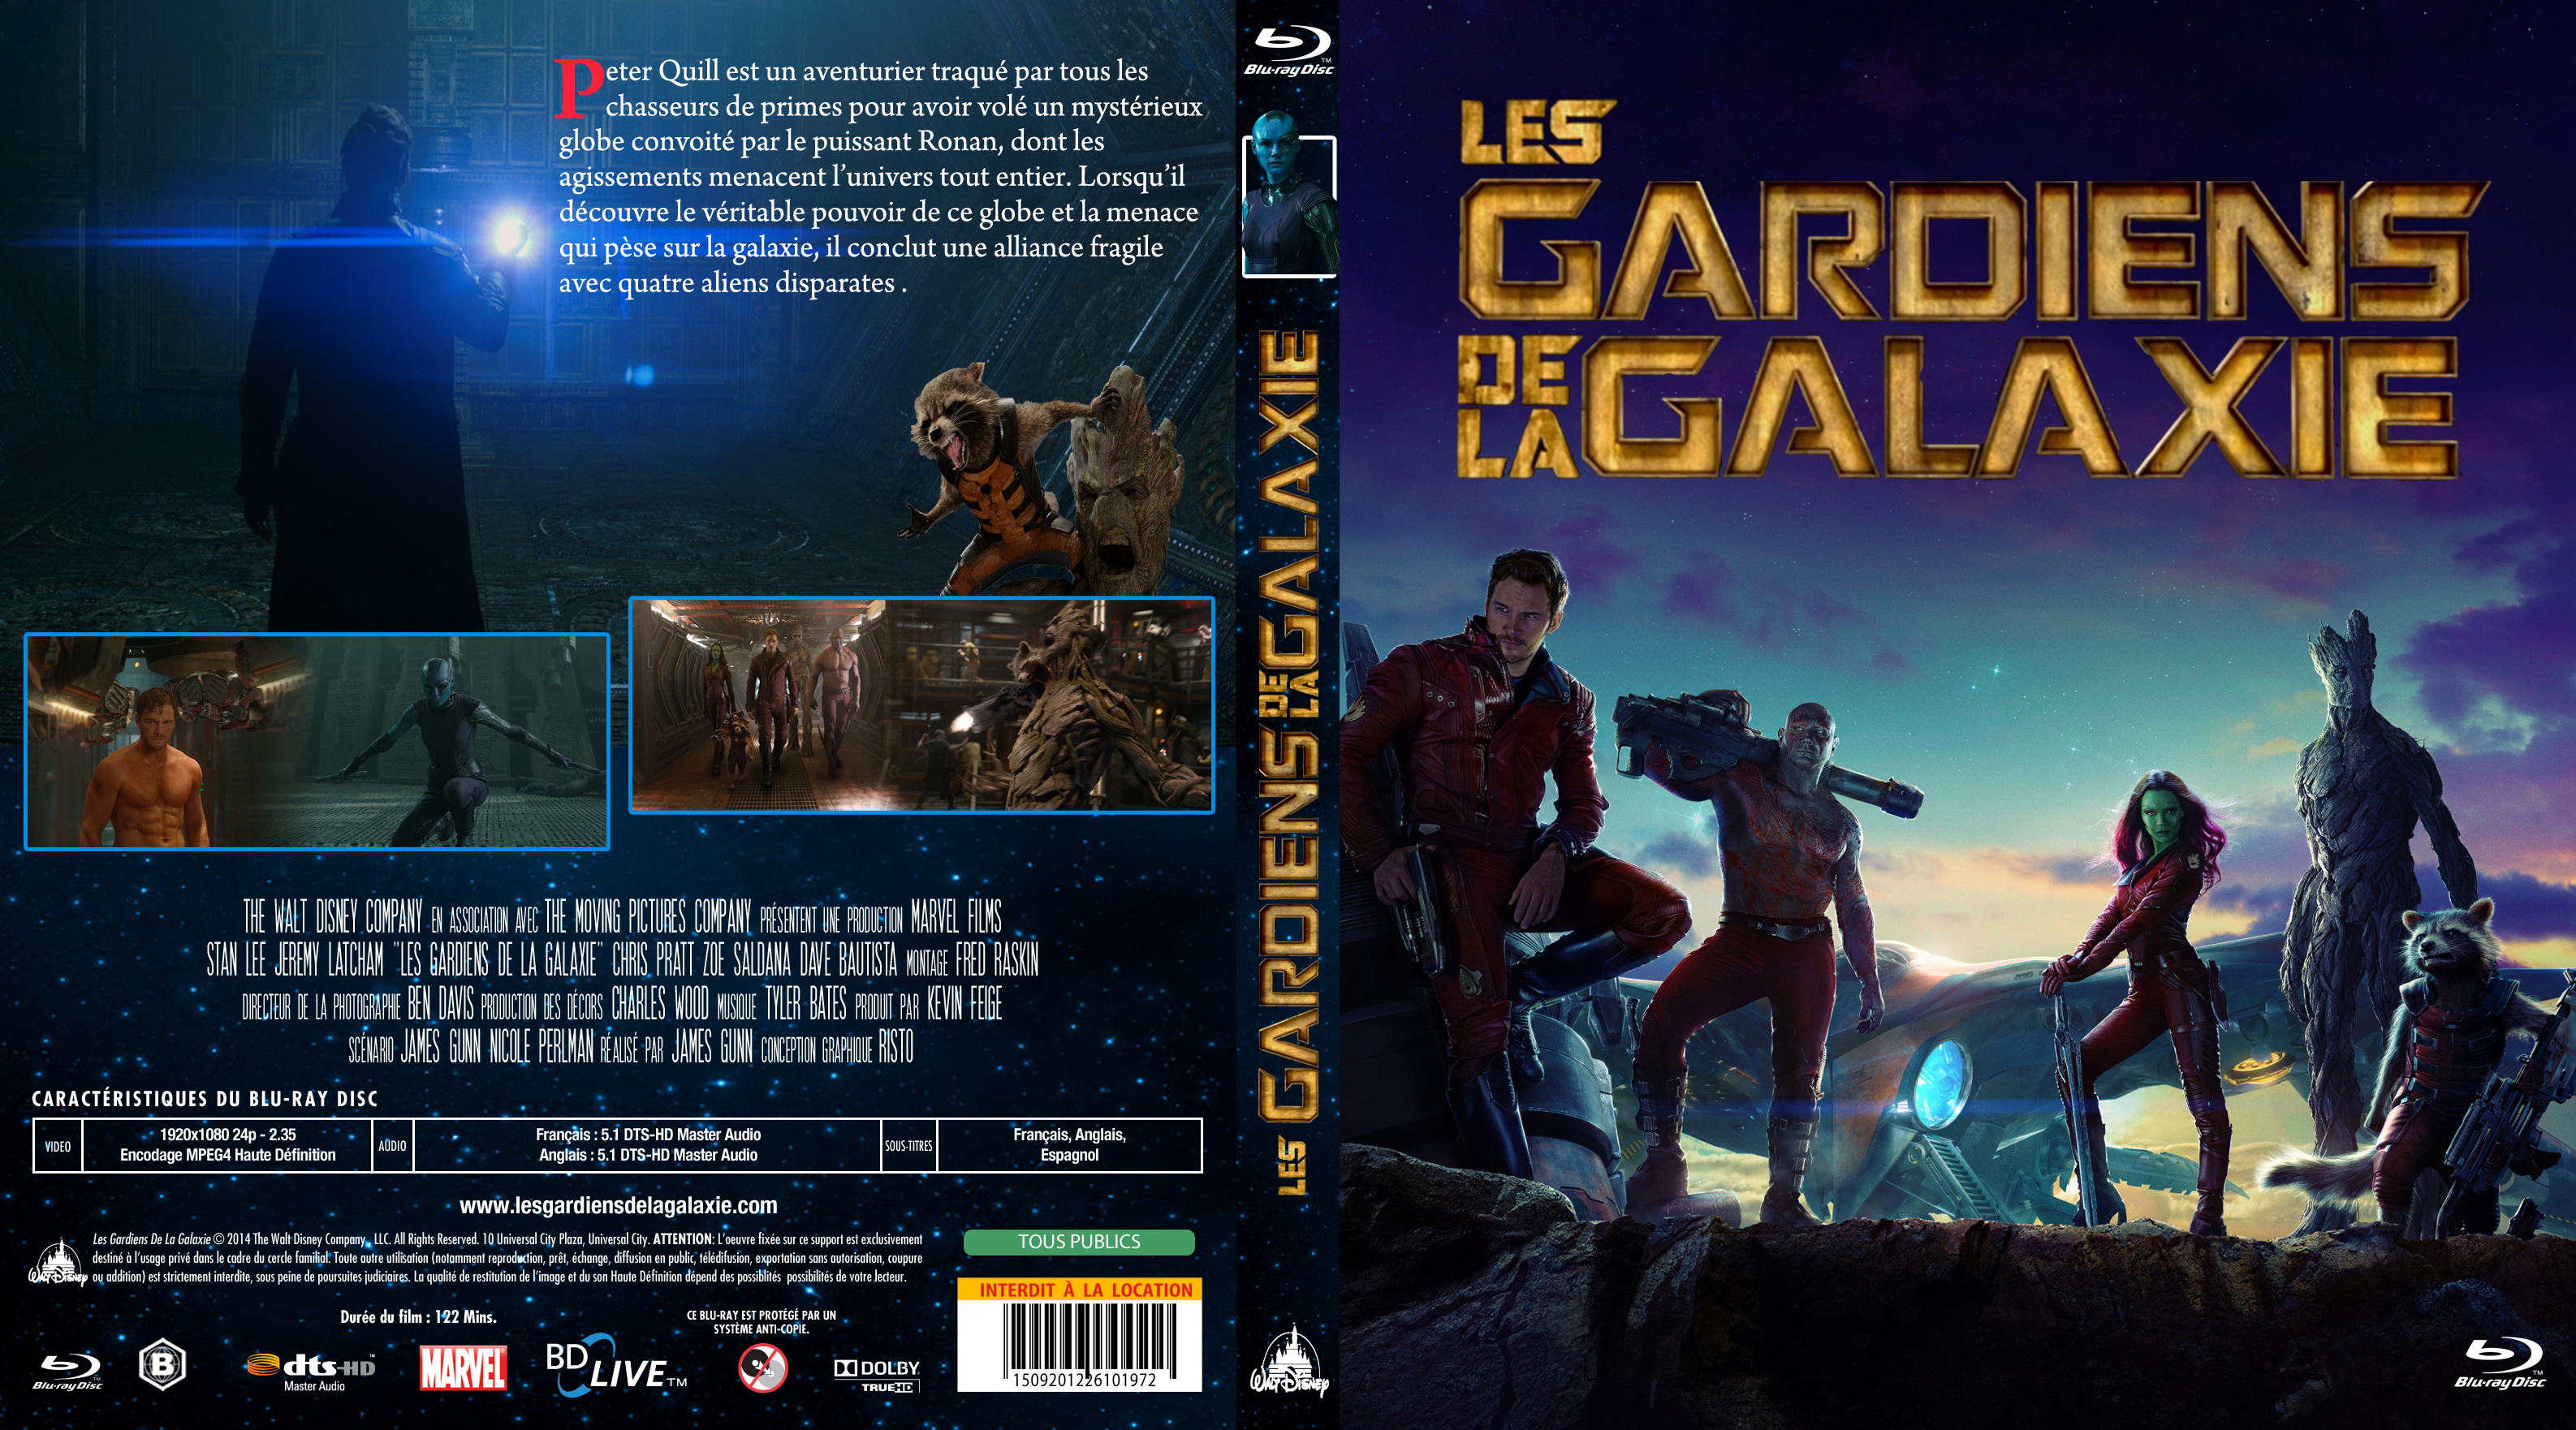 Jaquette DVD Les gardiens de la galaxie custom (BLU-RAY)